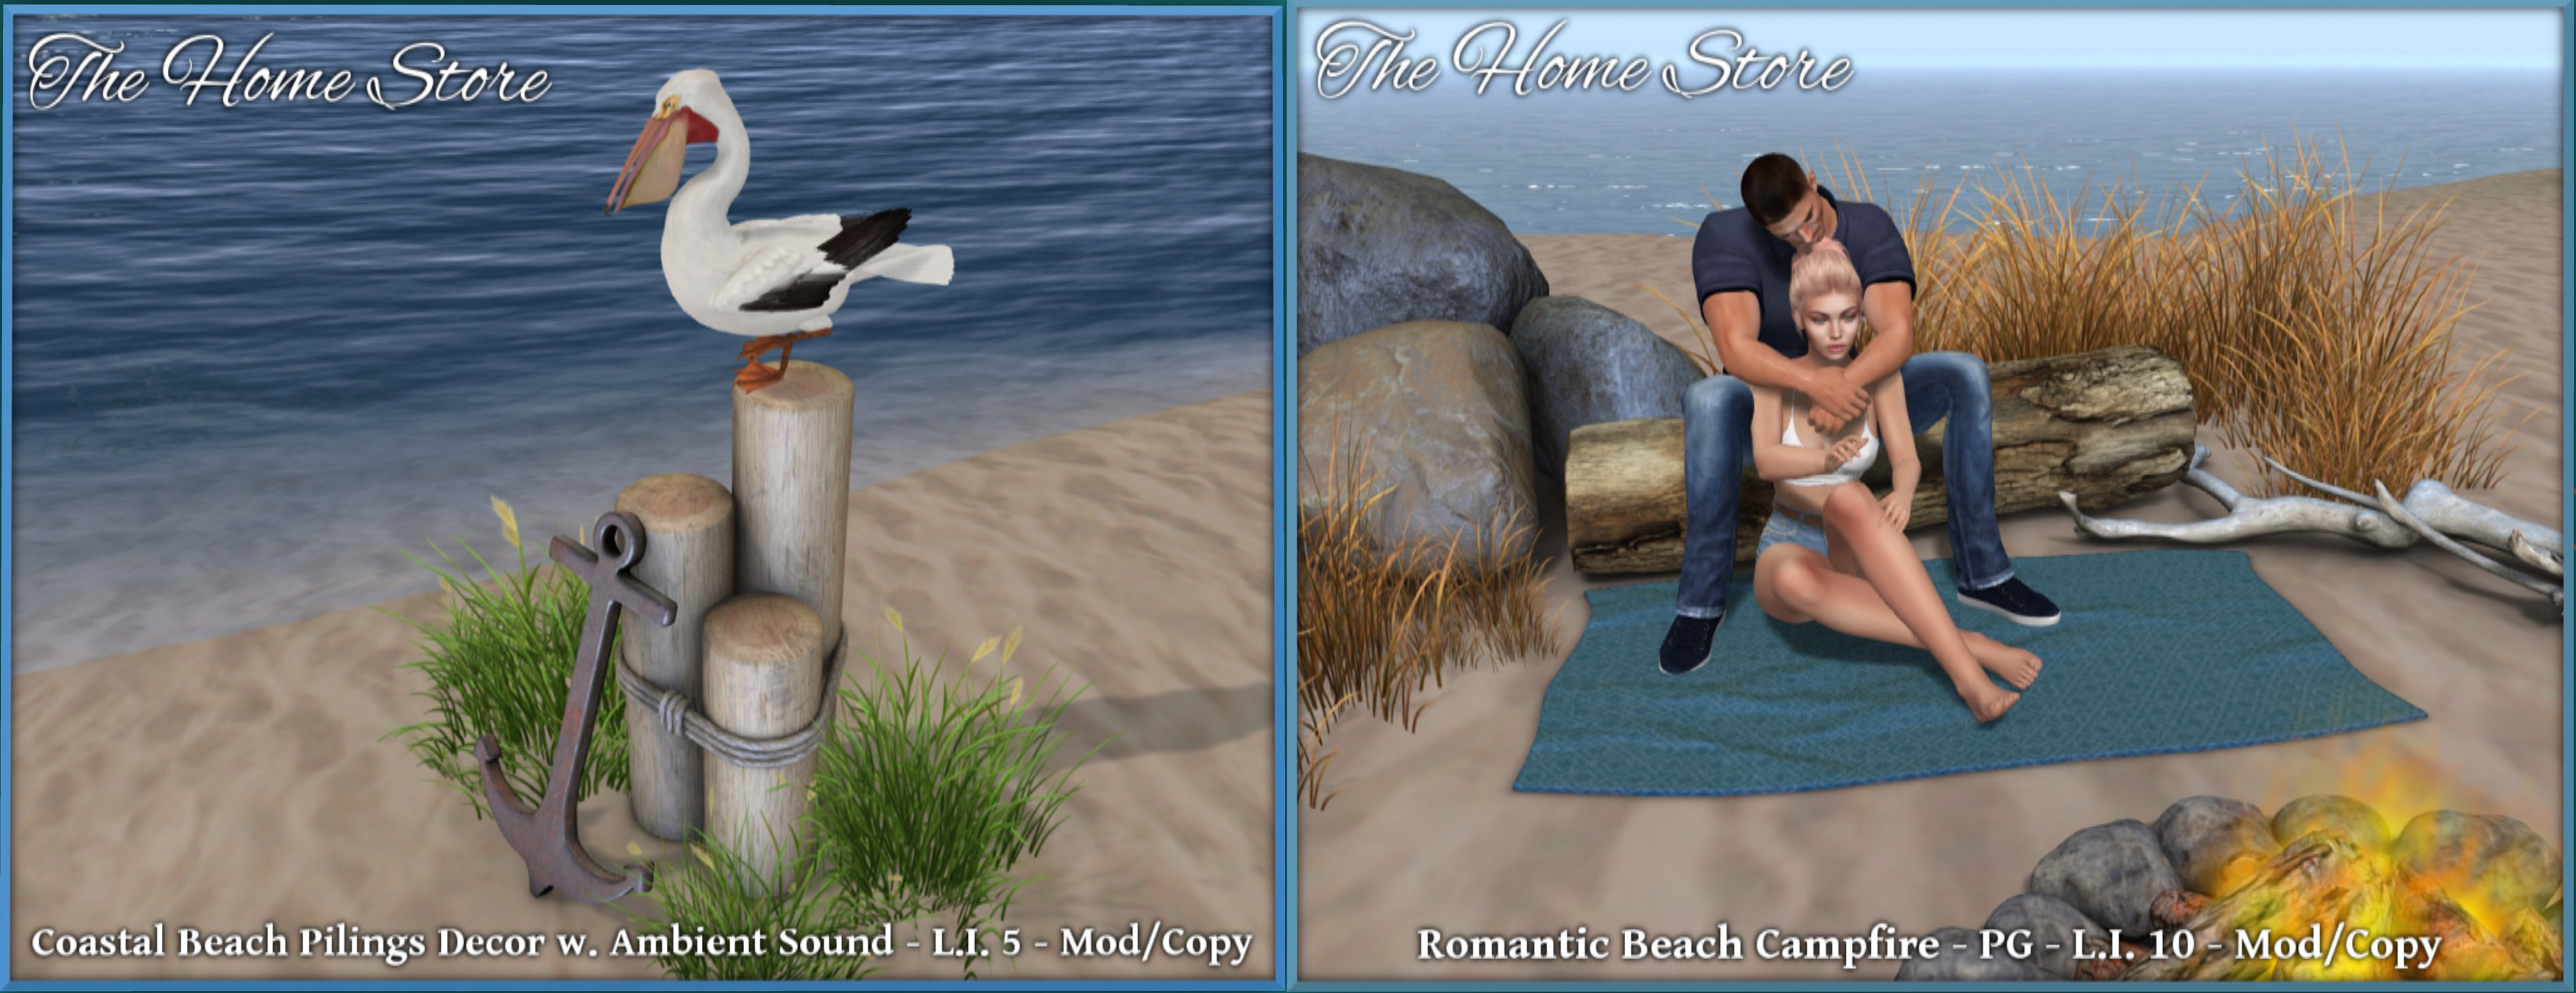 The Home Store – Coastal Beach Pilings & Romantic Beach Campfire